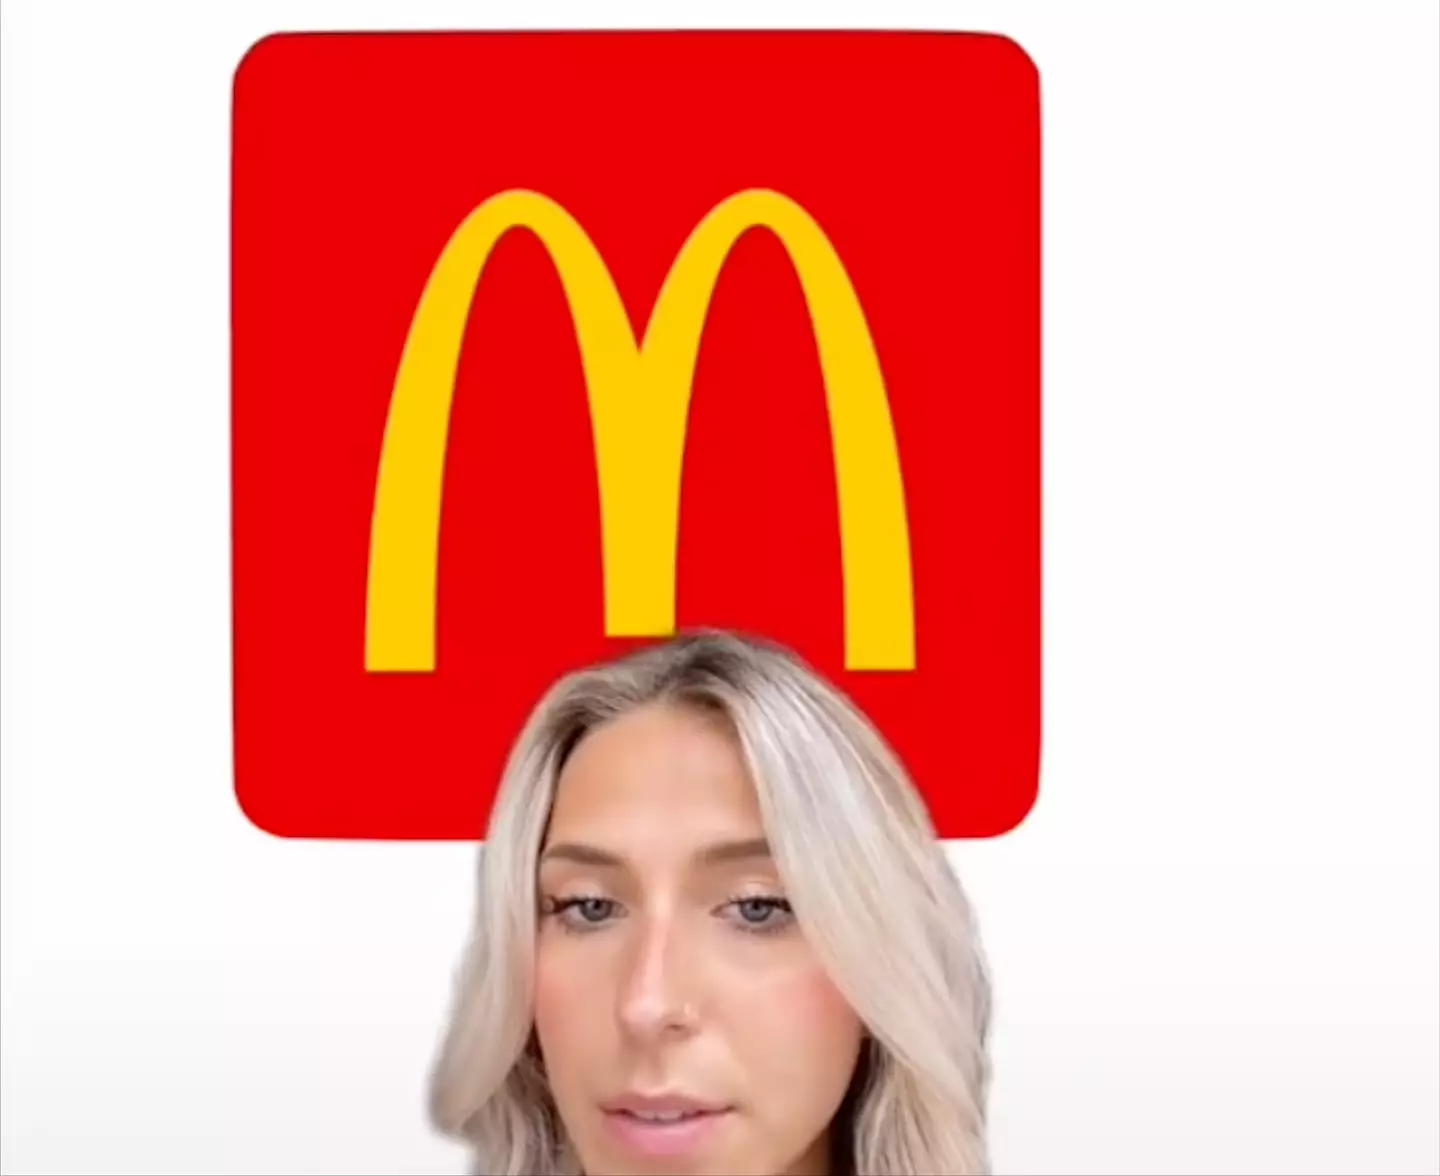 McDonald's asked Emily to redesign their logo (